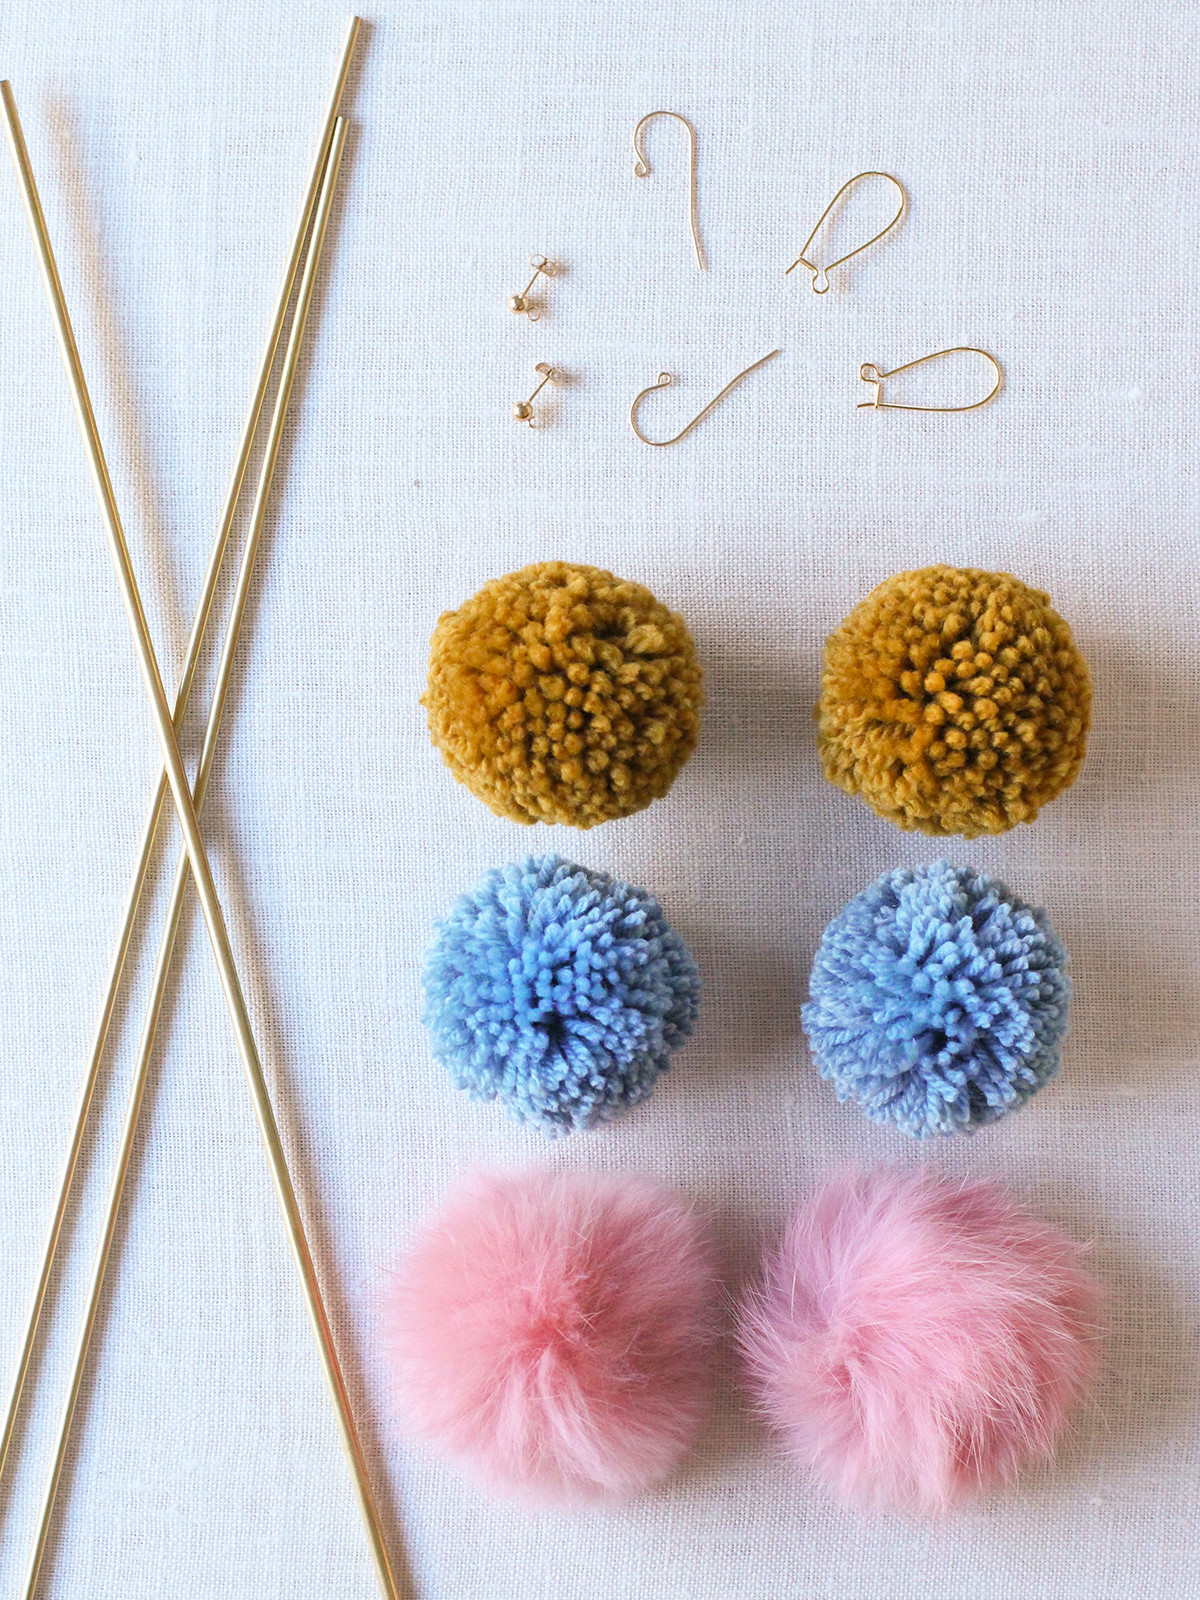 Best ideas about DIY Pom Pom
. Save or Pin DIY Pom Pom Earrings – Honestly WTF Now.